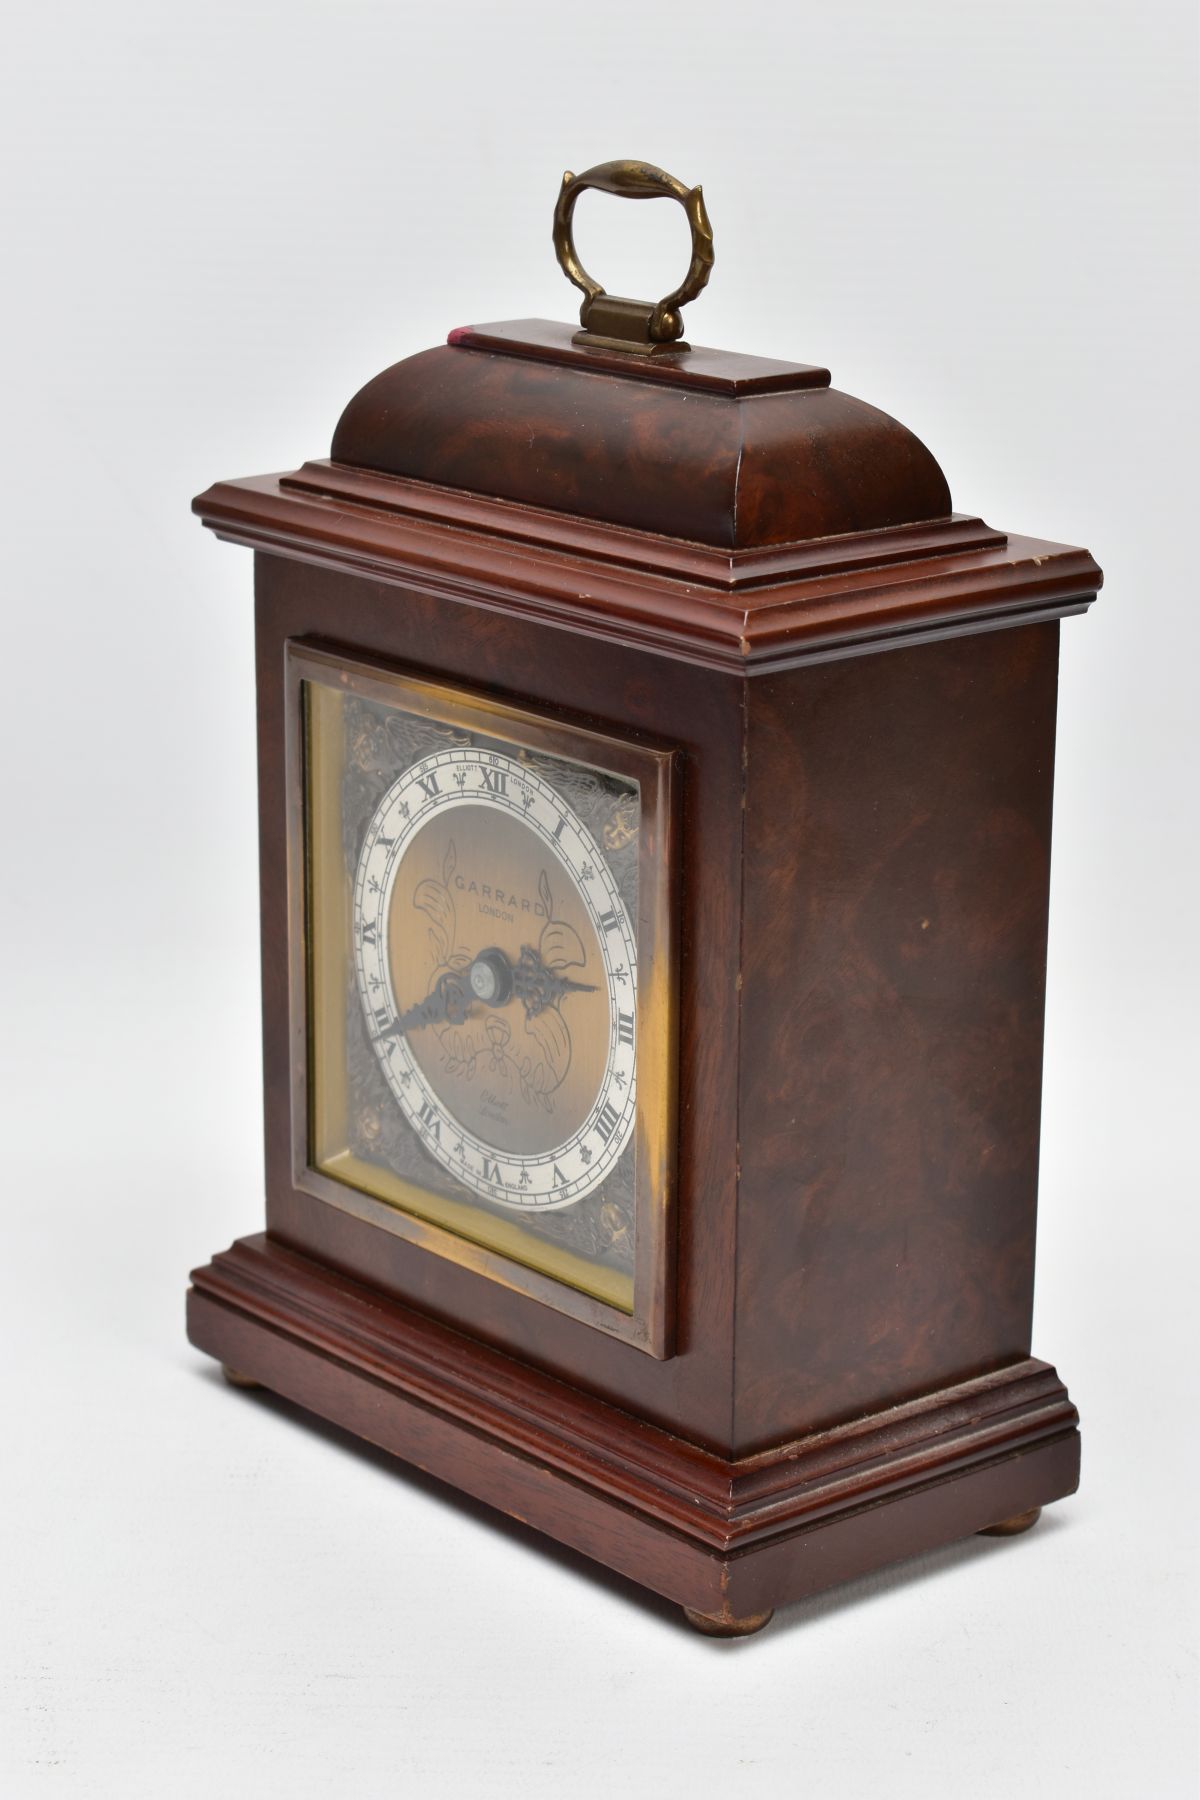 A BURR WOOD CASED GARRARD MANTLE CLOCK, London Elliott mantel clock the silvered ring set with Roman - Image 2 of 6